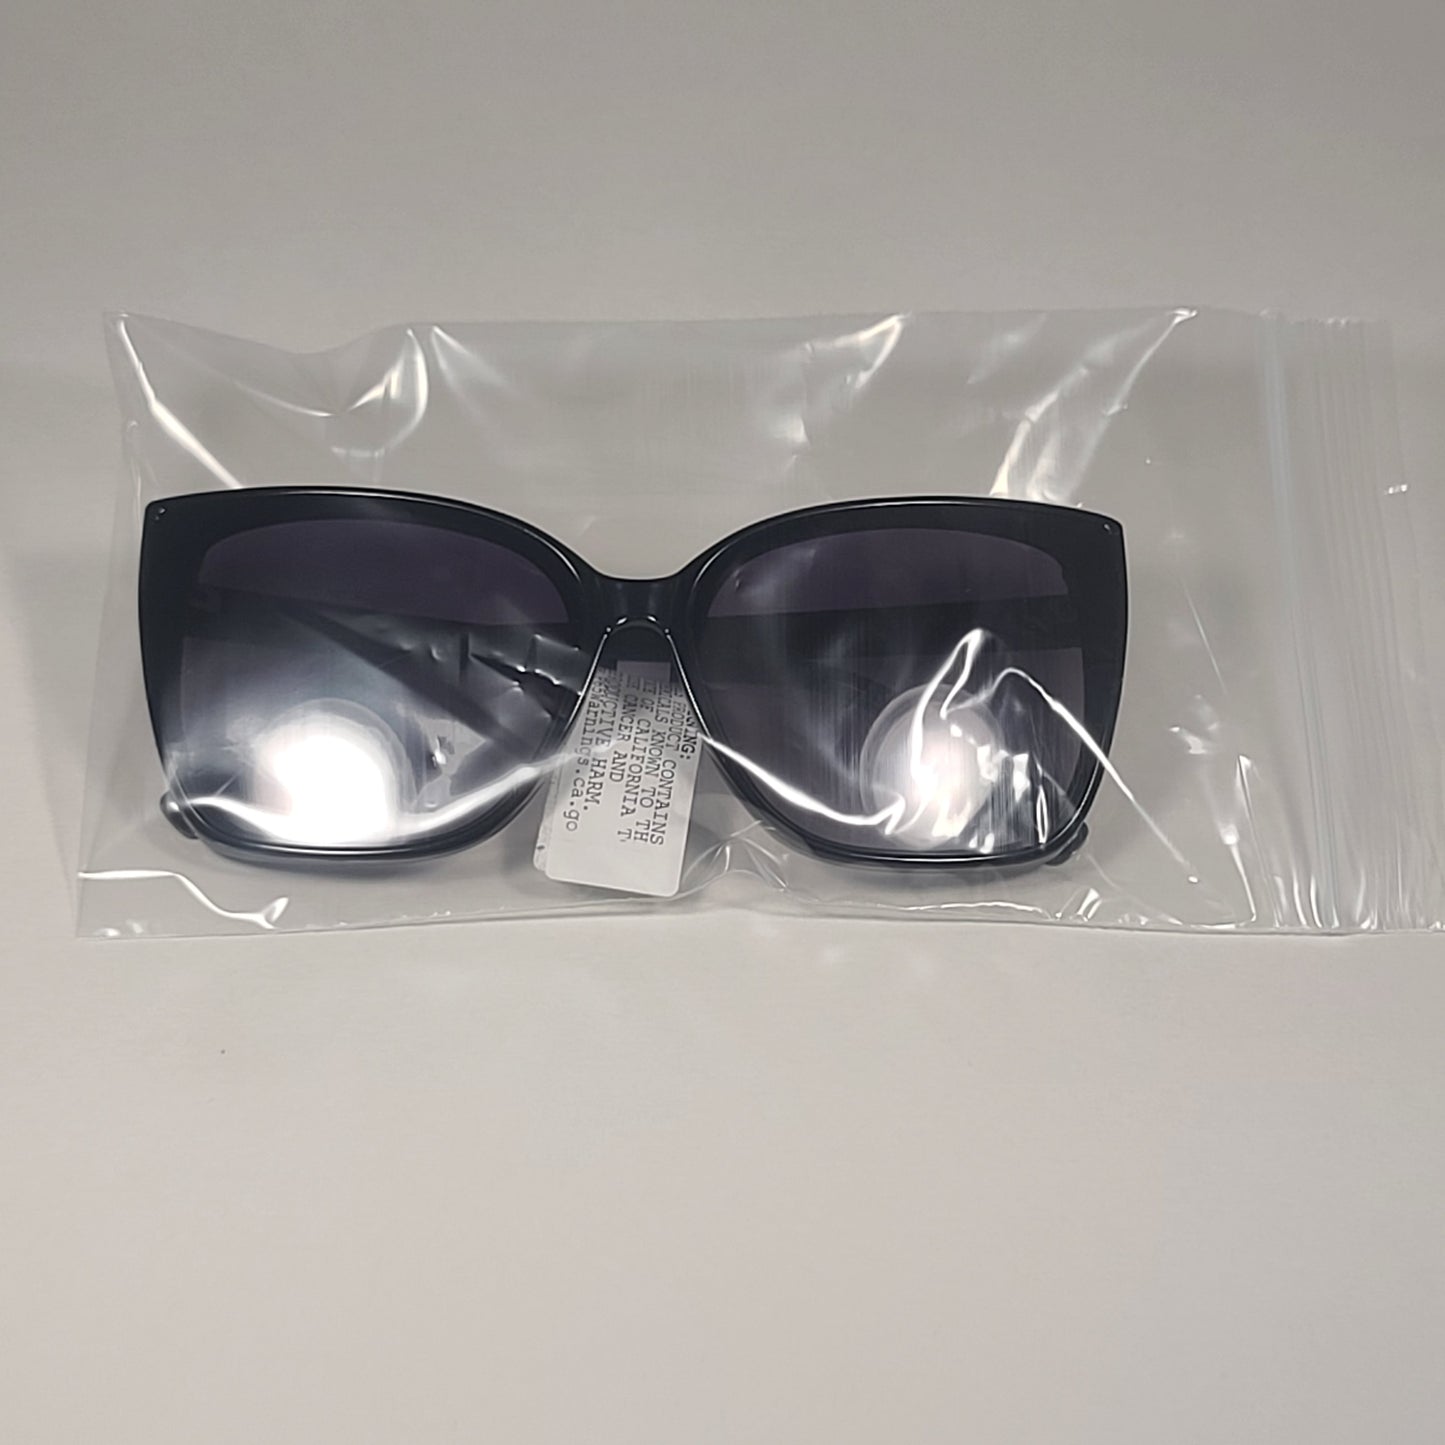 Guess GF0412 01B Oversized Butterfly Sunglasses Shiny Black Smoke Gradient Lens - Sunglasses